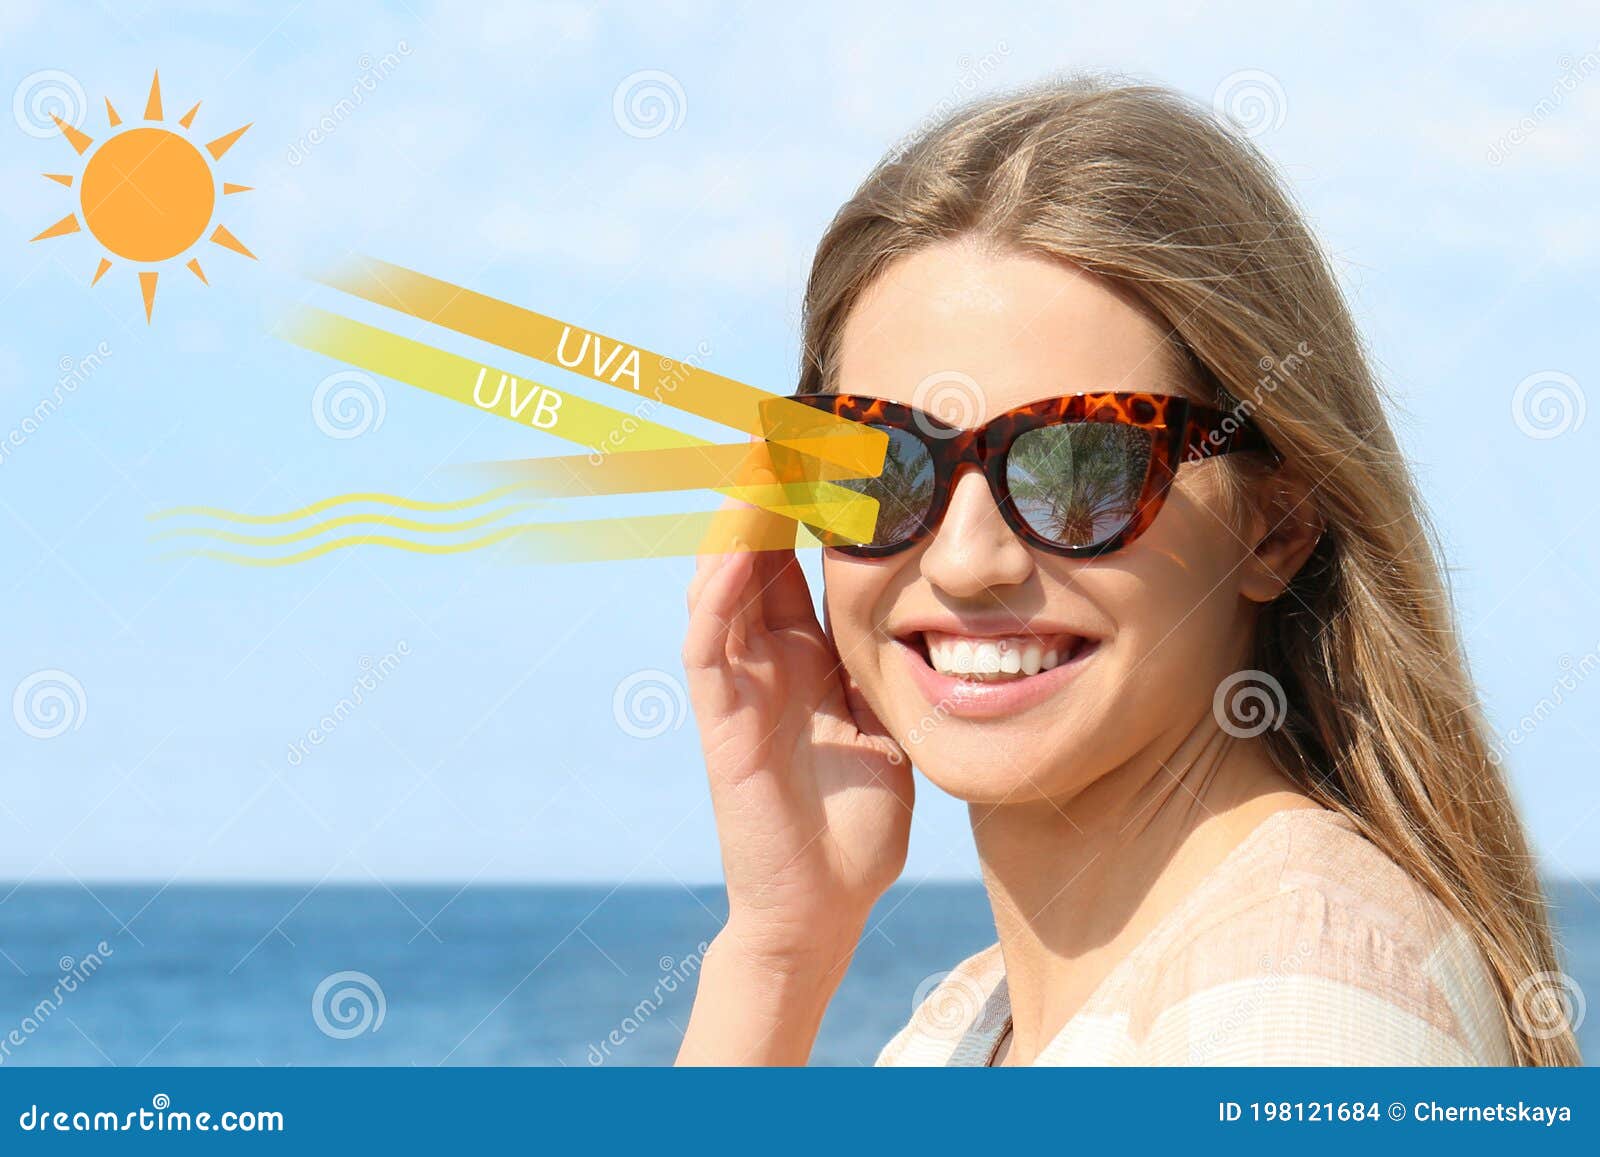 Summer eye care: Valid reasons to start wearing UV sunglasses